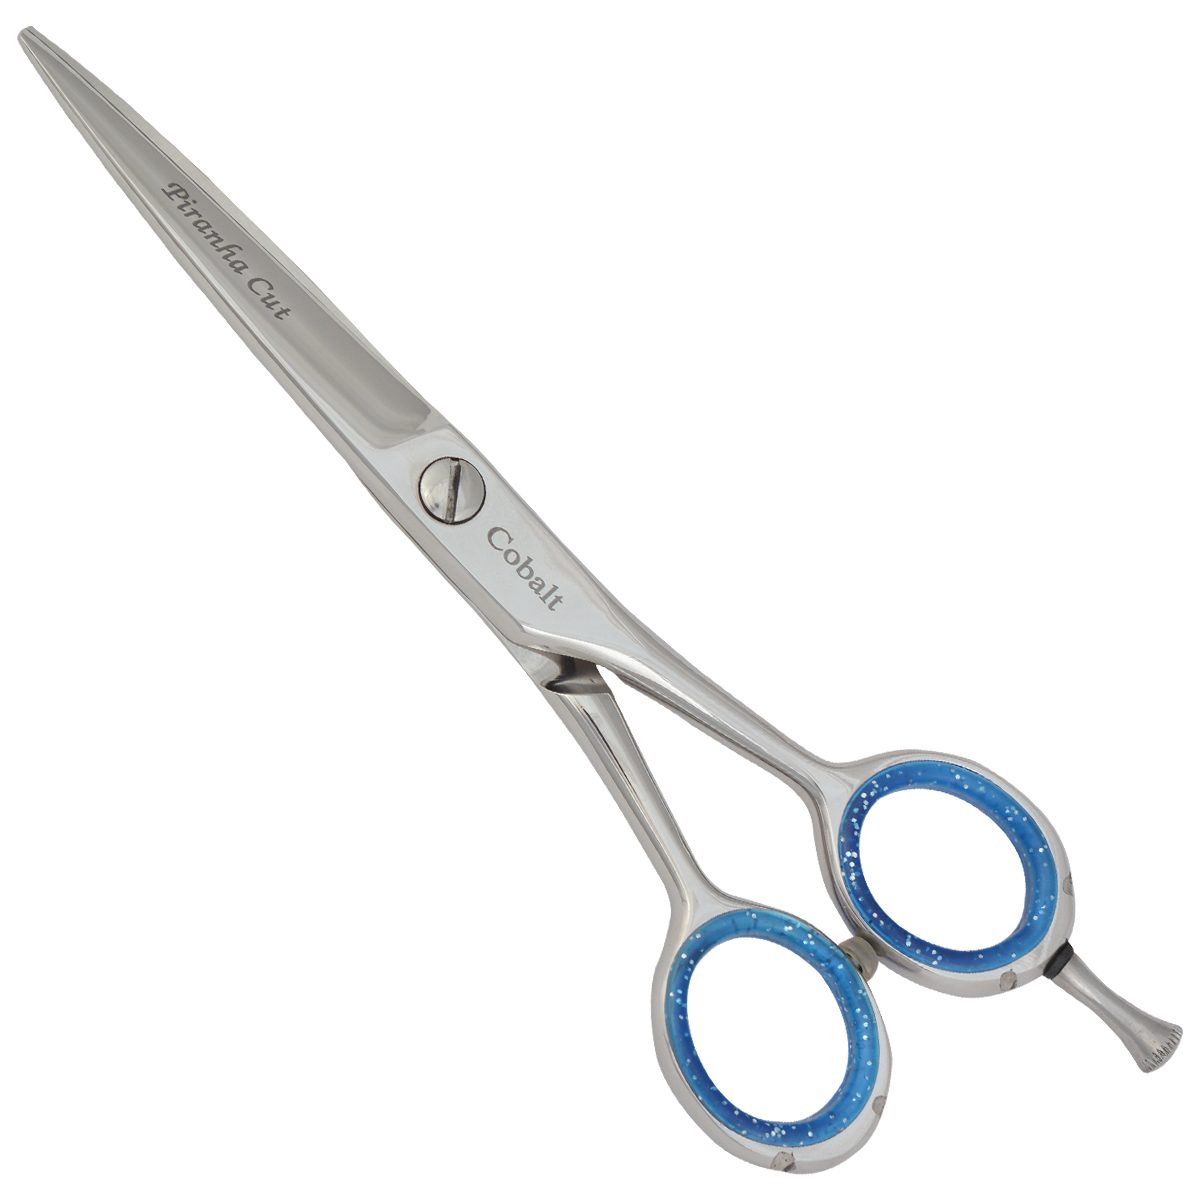 Razor Edge Barber Scissors